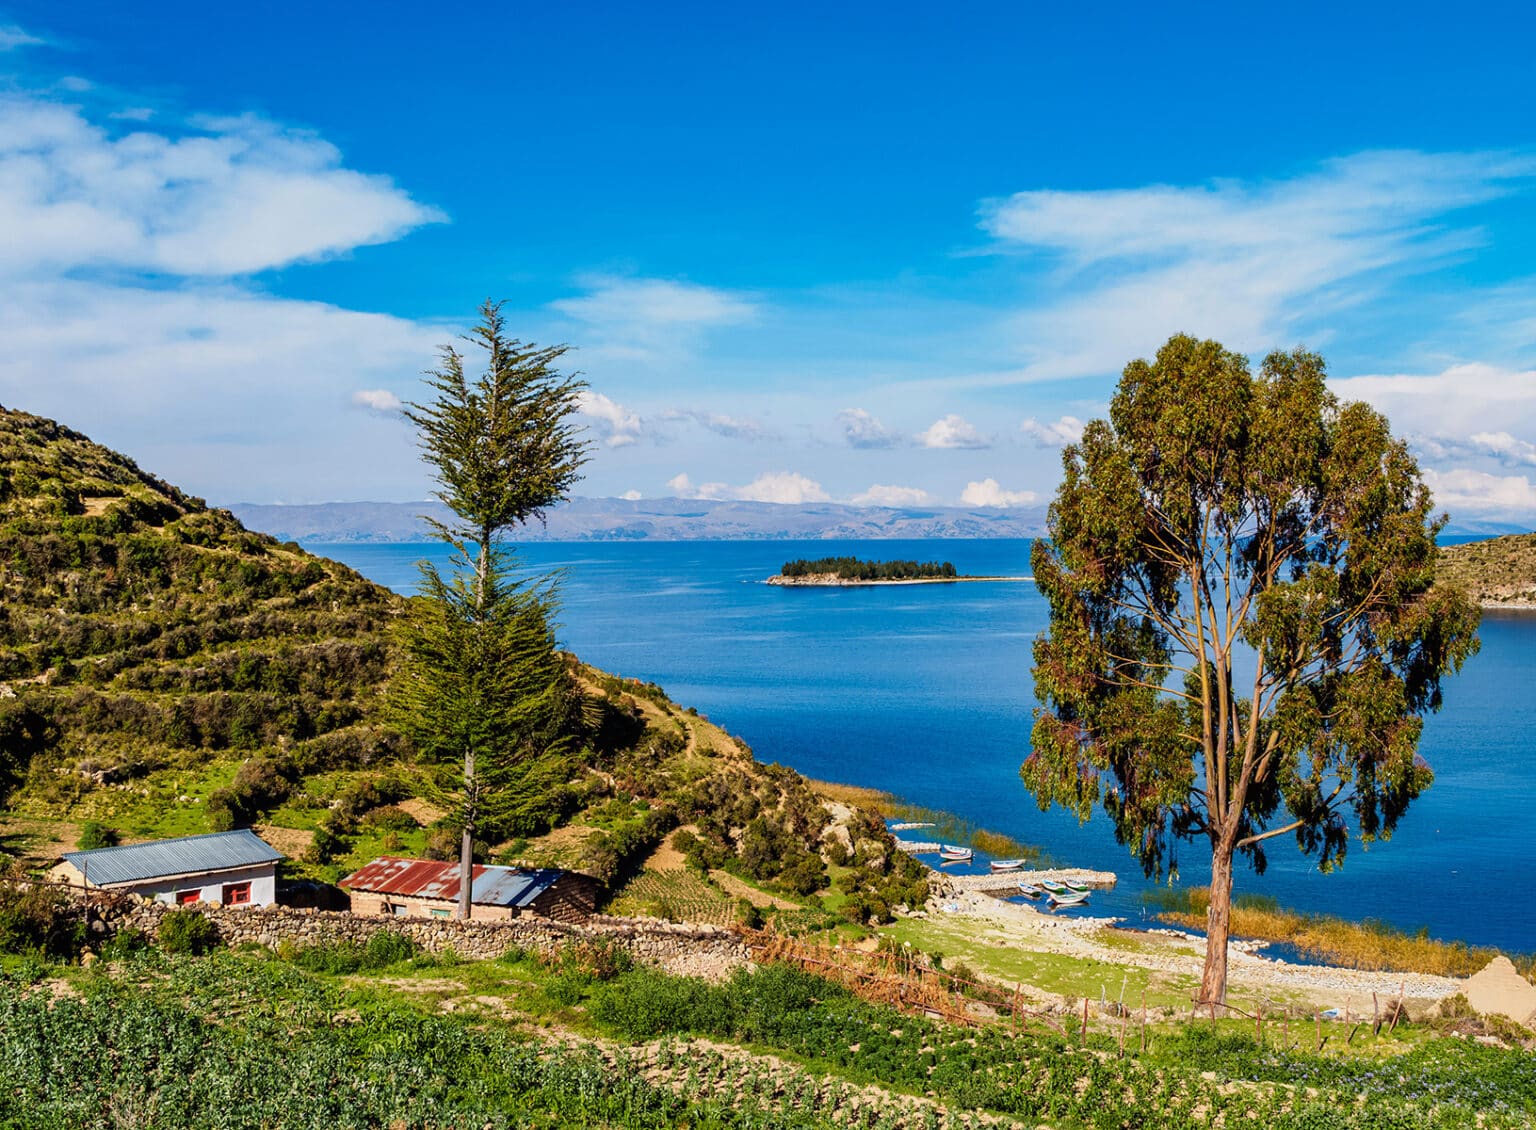 Sun Island - Lake Titicaca - Bolivia